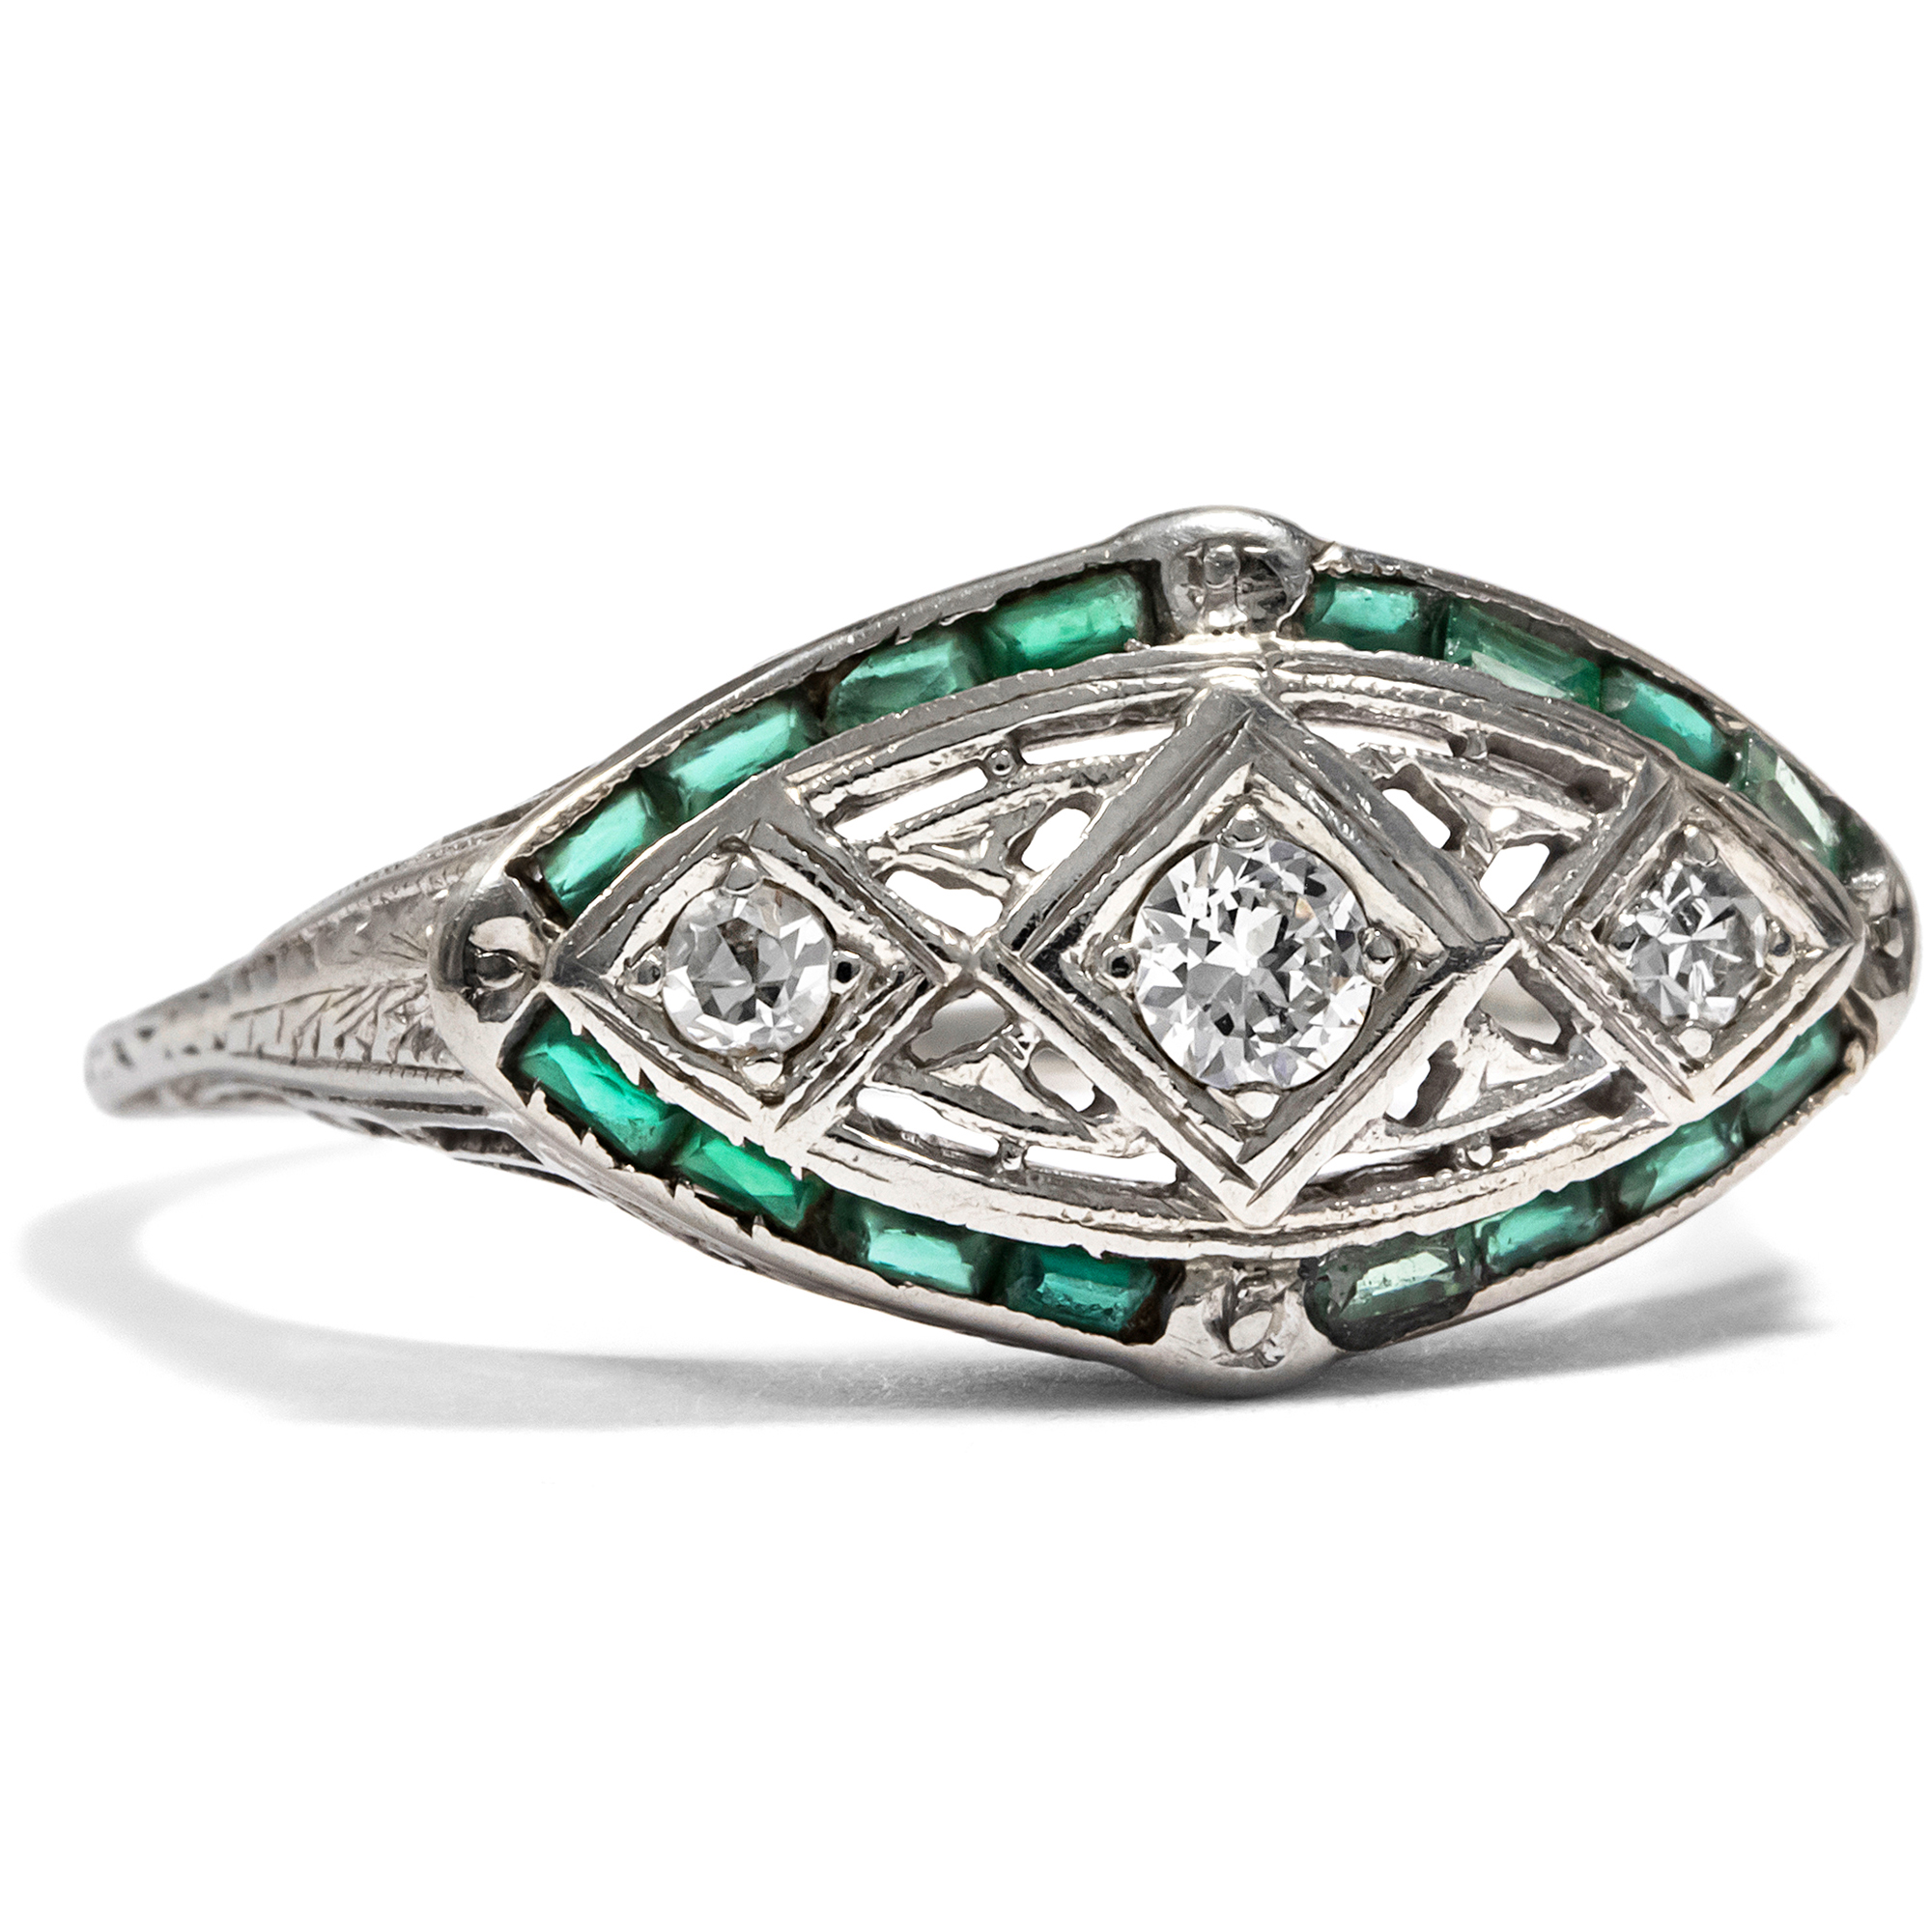 Elegant Diamond and Emerald Ring in White Gold, New York c. 1930